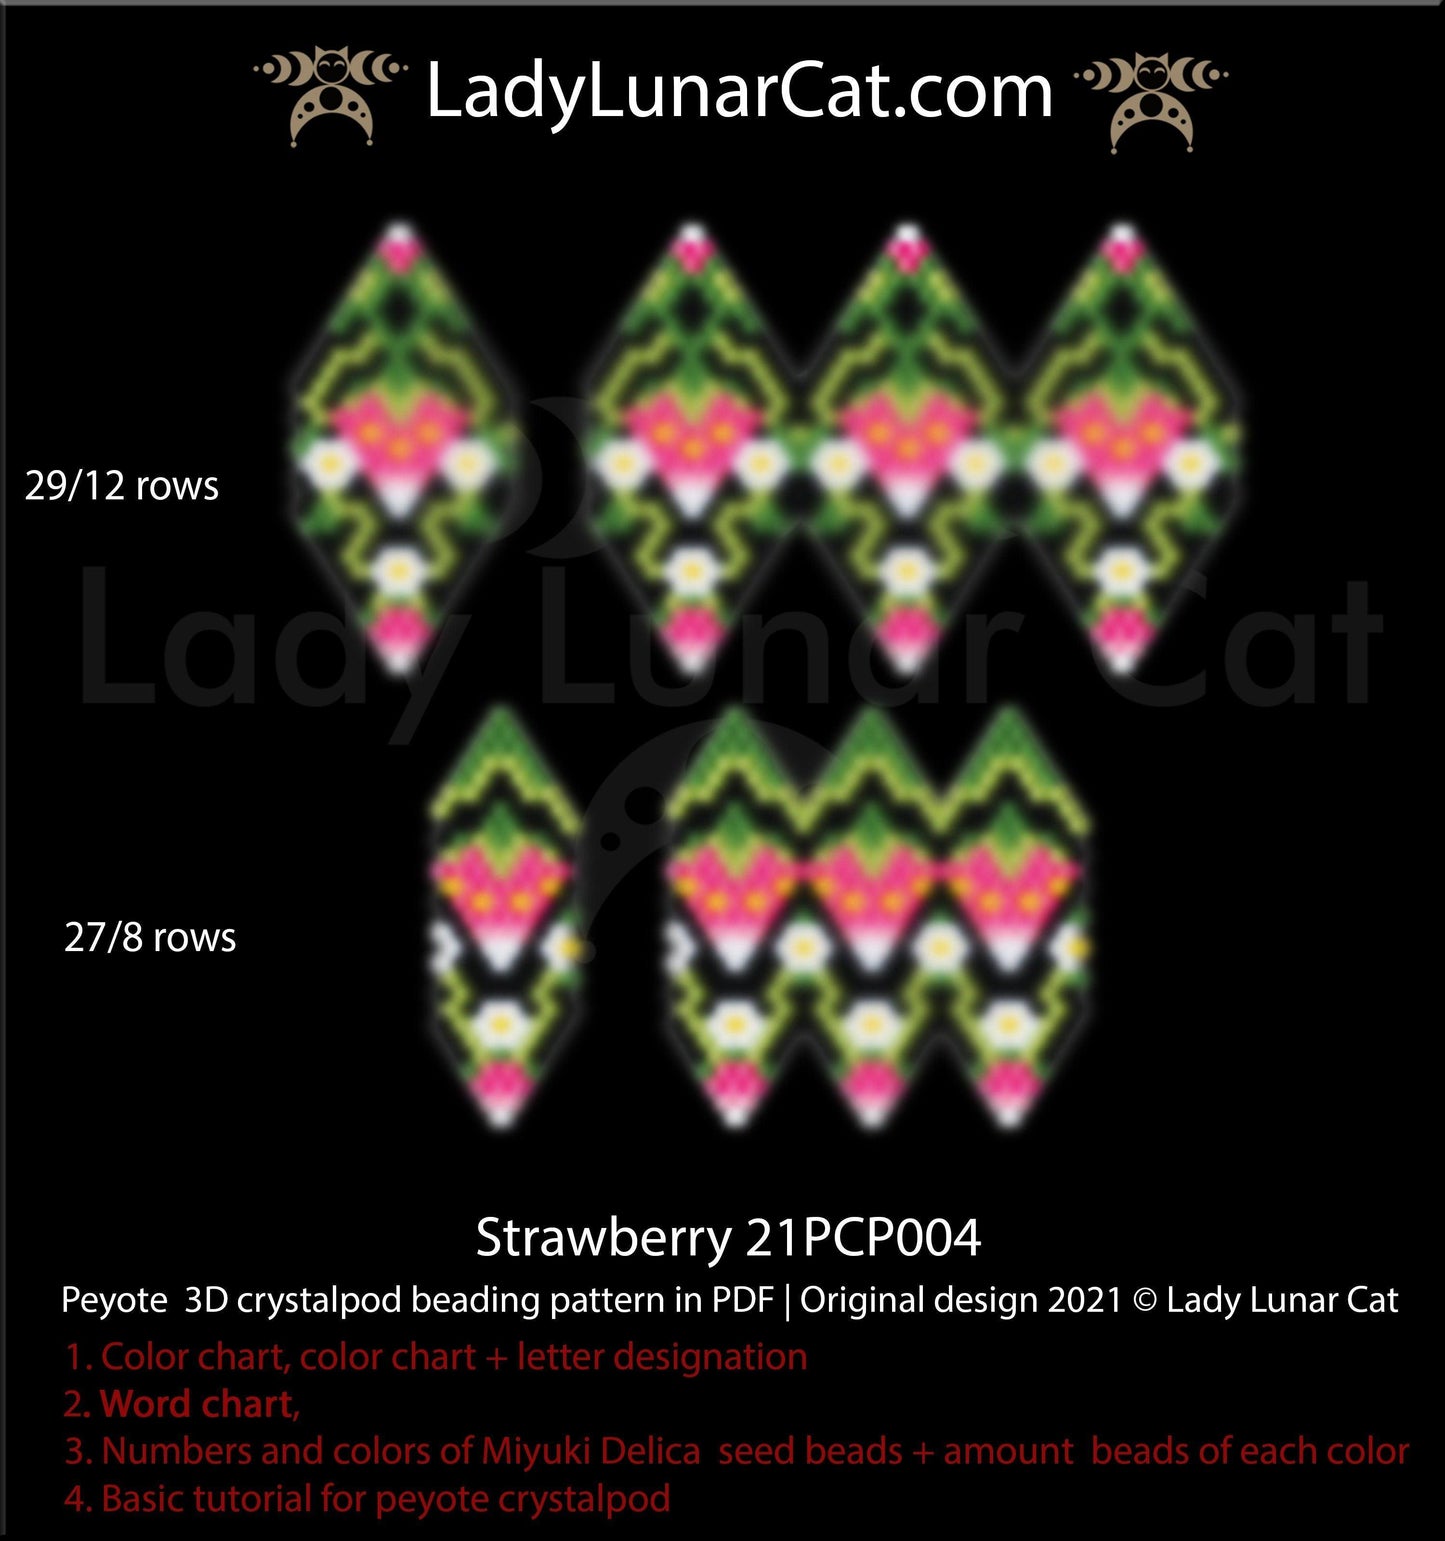 Copy of 3d peyote pod pattern or crystalpod pattern for beading  Rose 21PCP003 LadyLunarCat